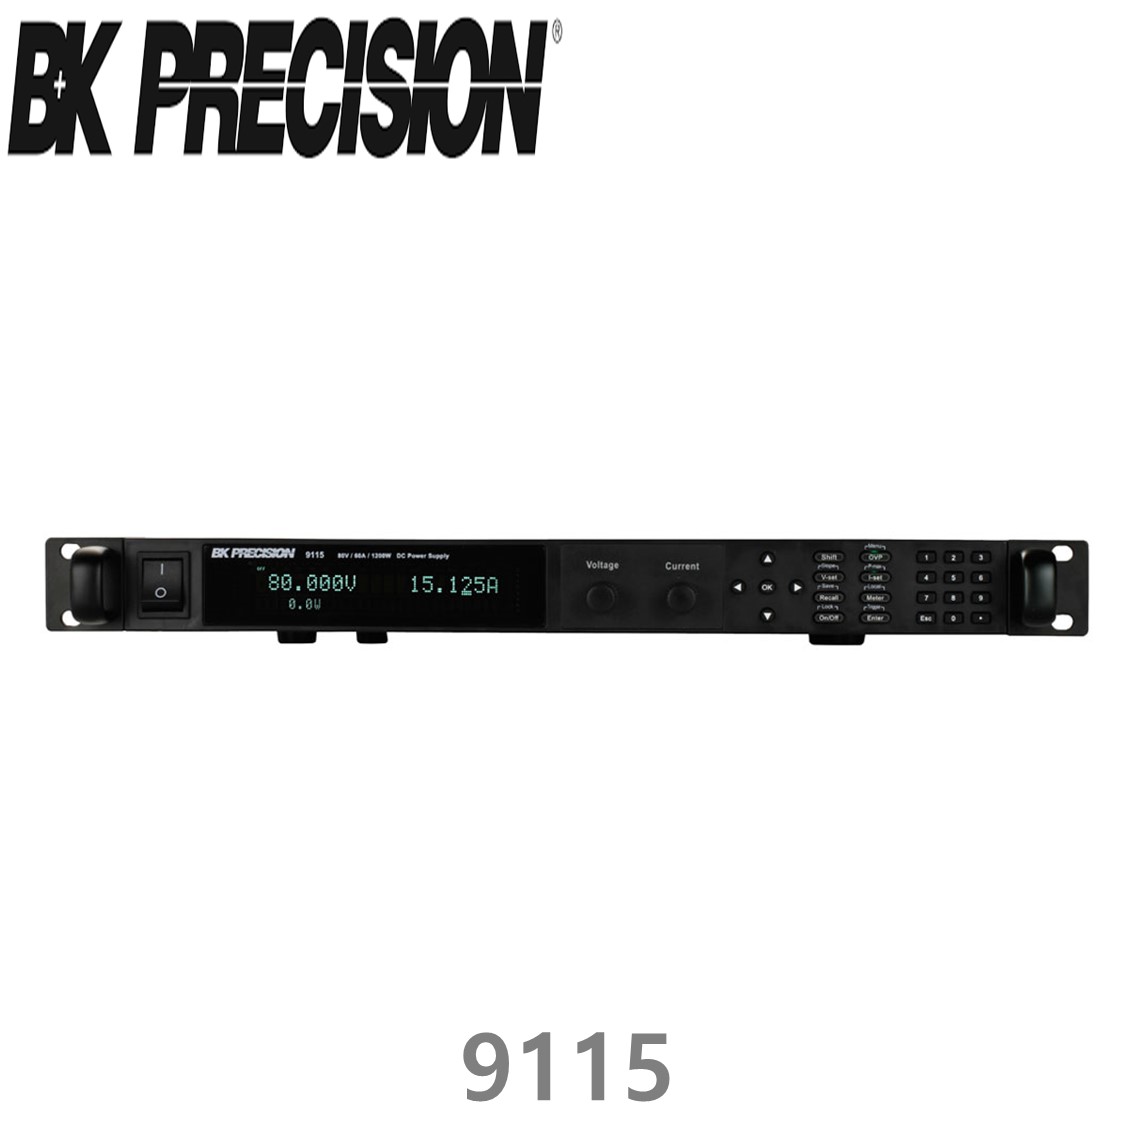 [ BK PRECISION ] BK 9115, 80V/60A(1200W), Programmable DC Power Supply,비케이,DC전원공급기 B&K 9115